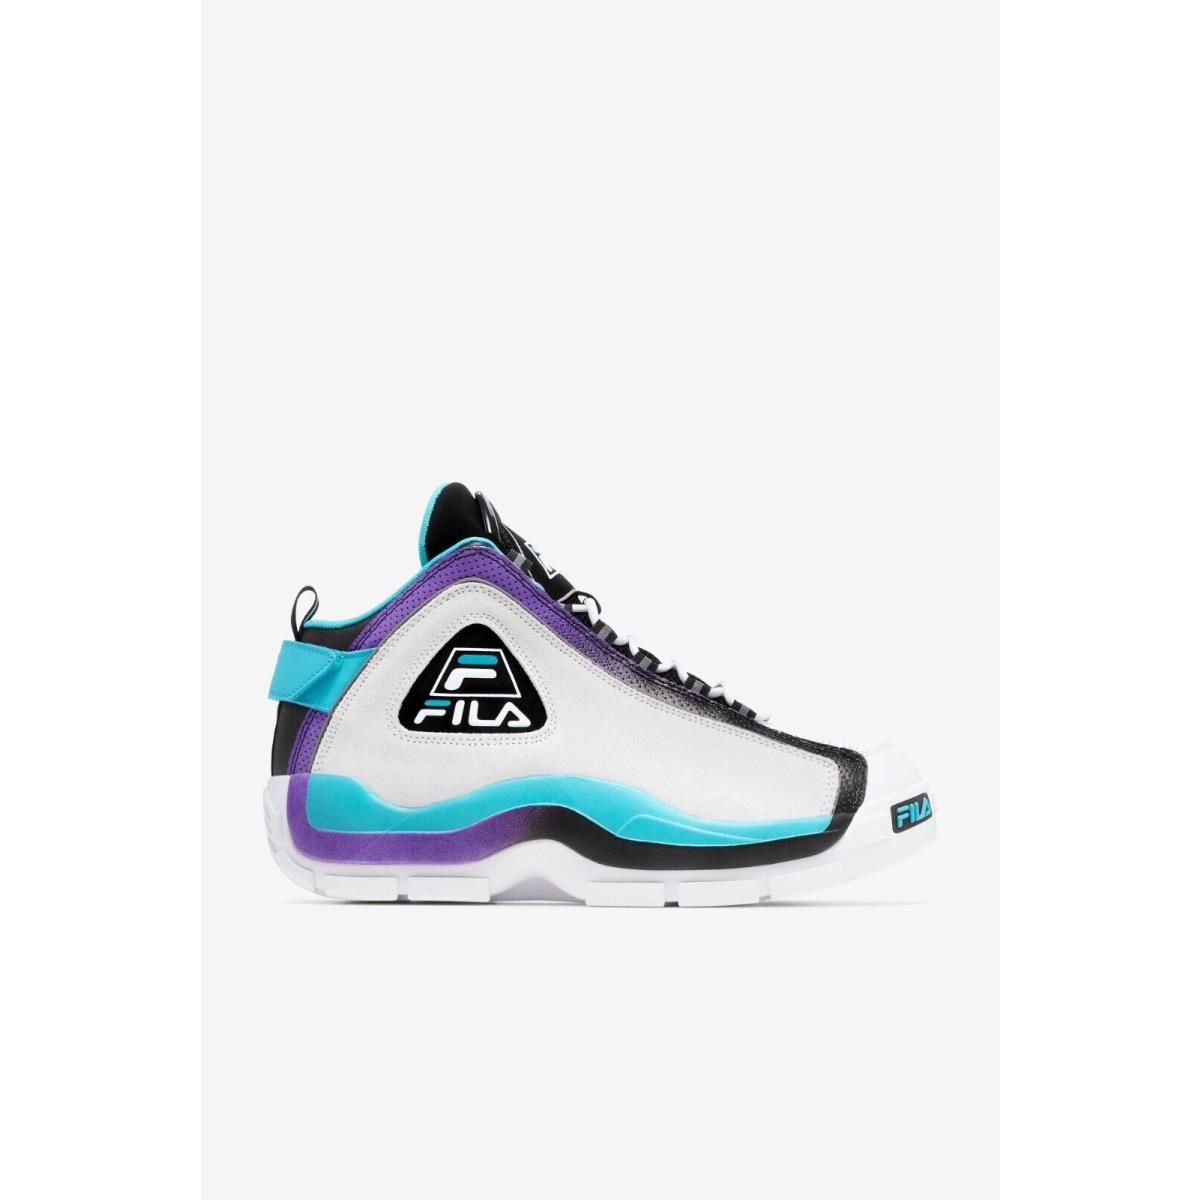 Fila Men`s Grant Hill 2 Basketball Shoes White / Scuba Blue / Electric Purple (148)